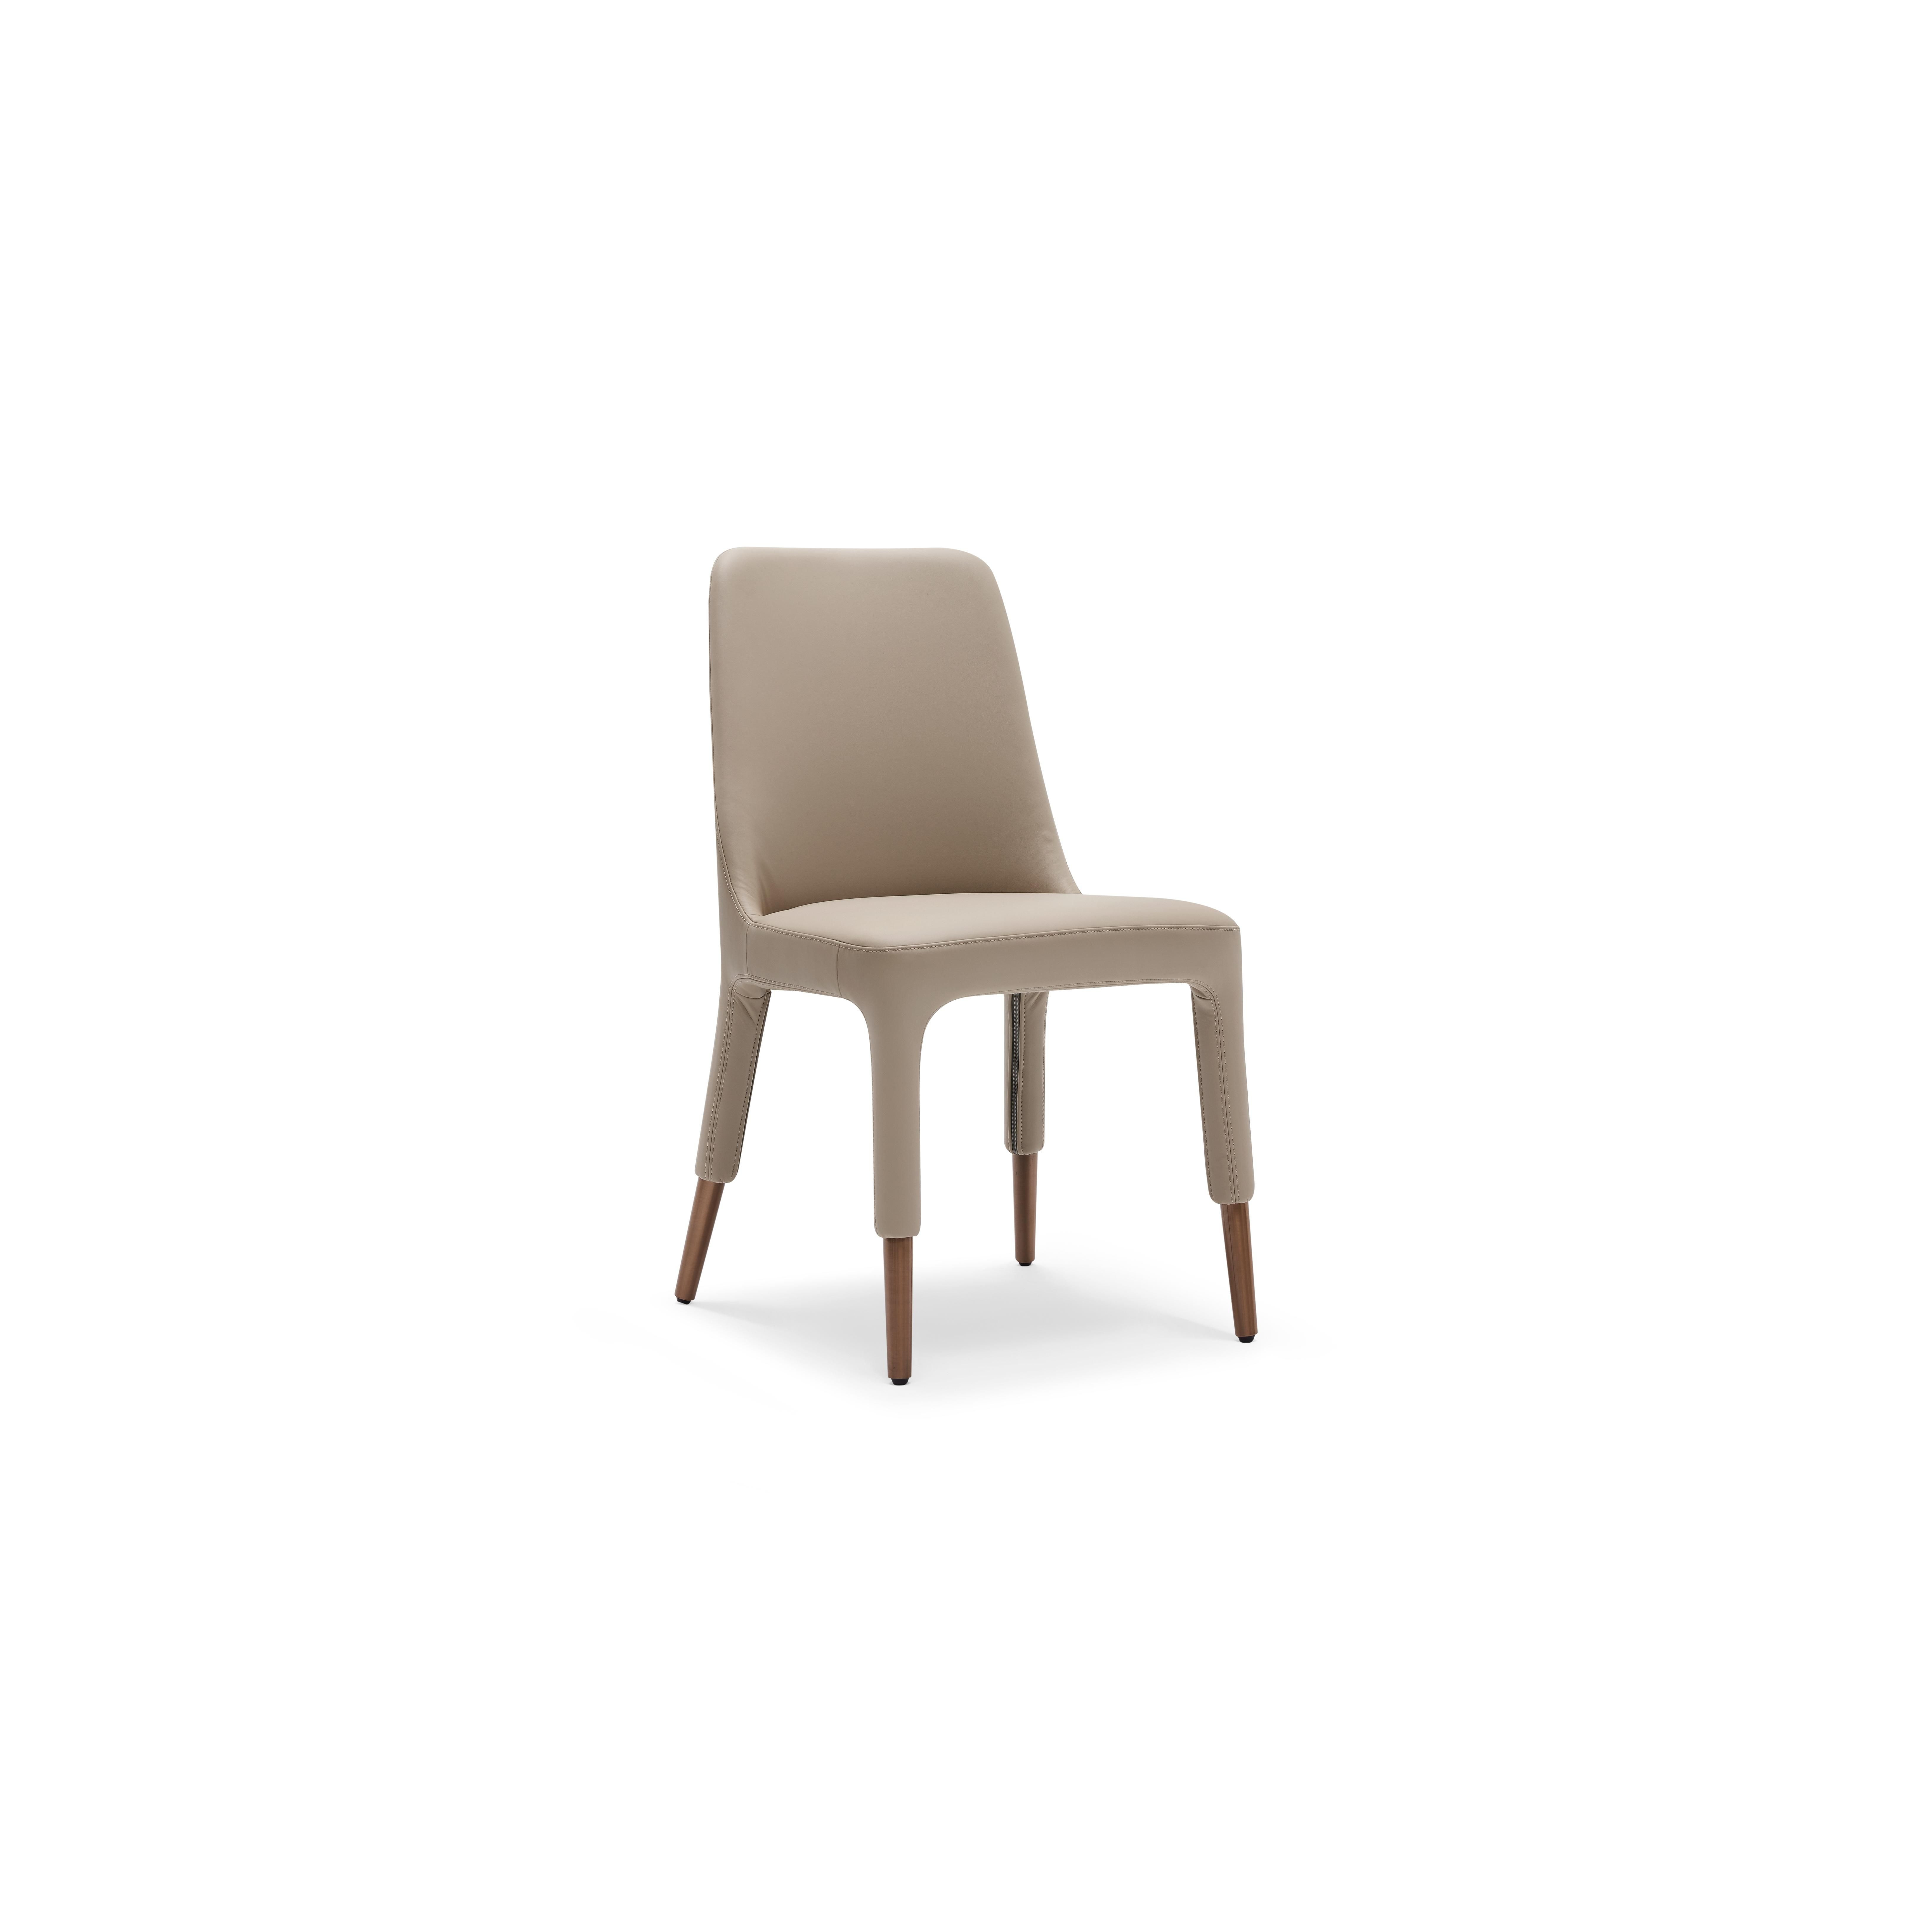 Dining Chair : SZ-C333